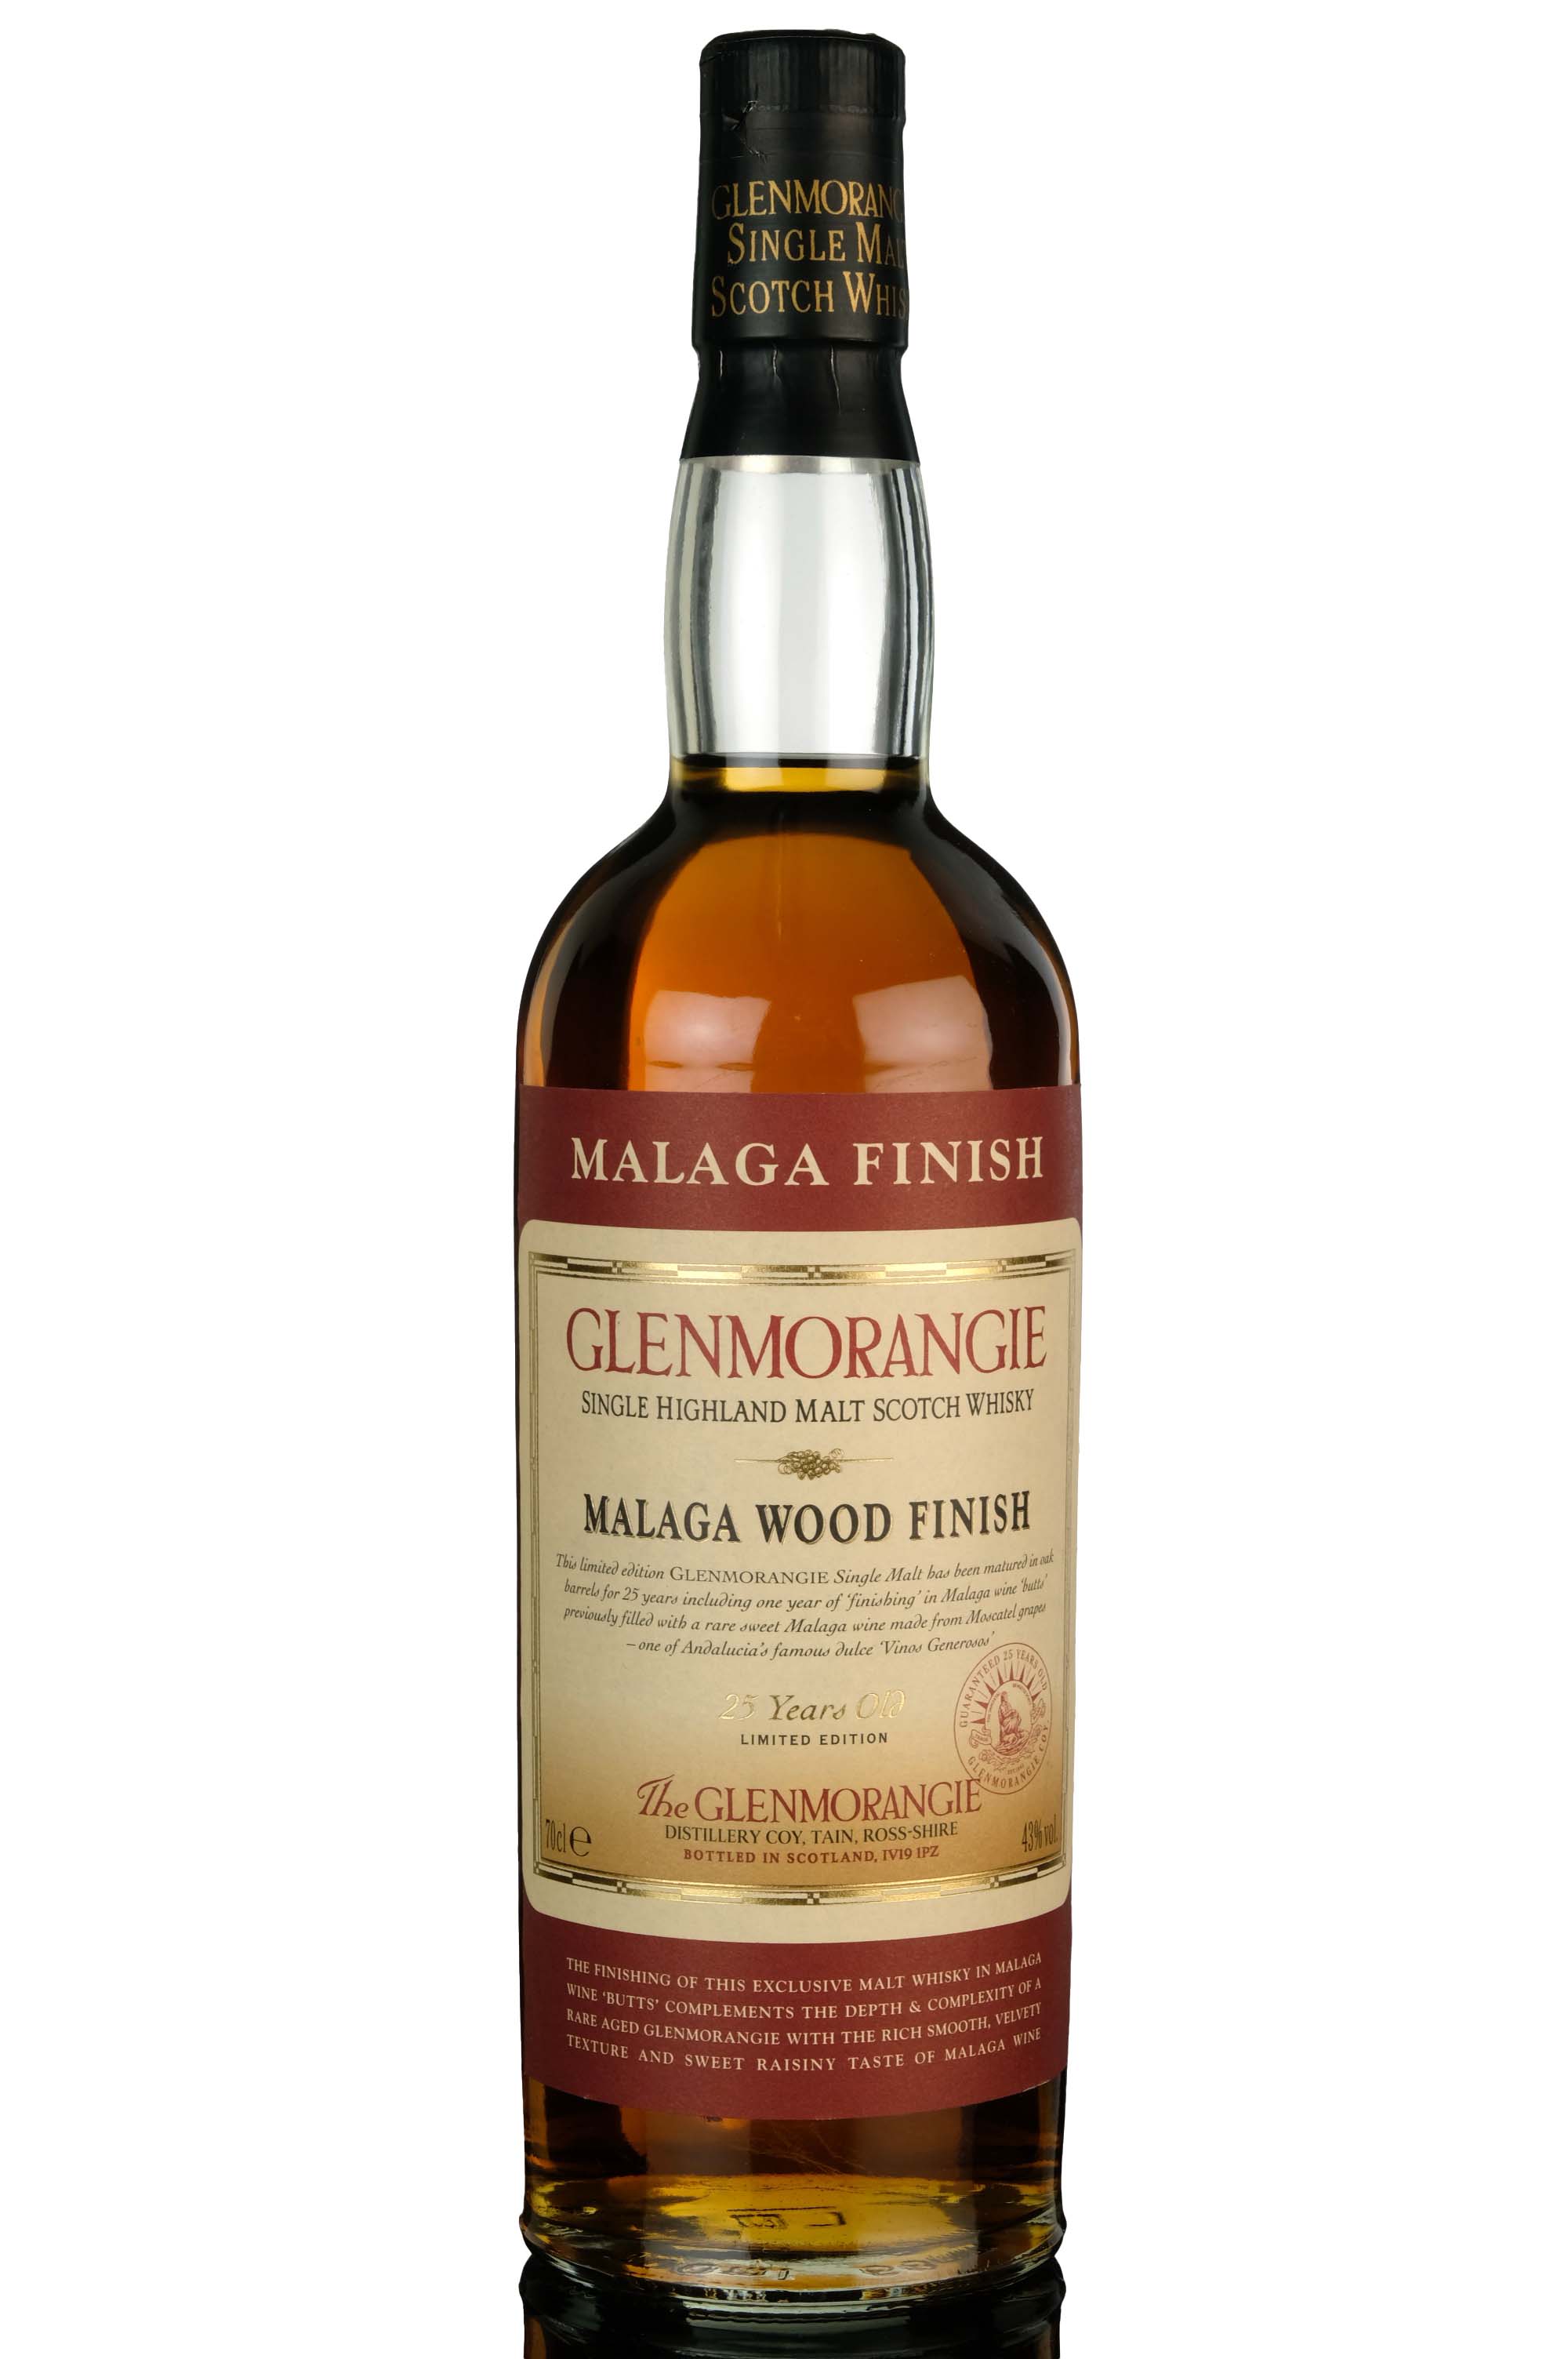 Glenmorangie 25 Year Old - Malaga Wood Finish - 2003 Release